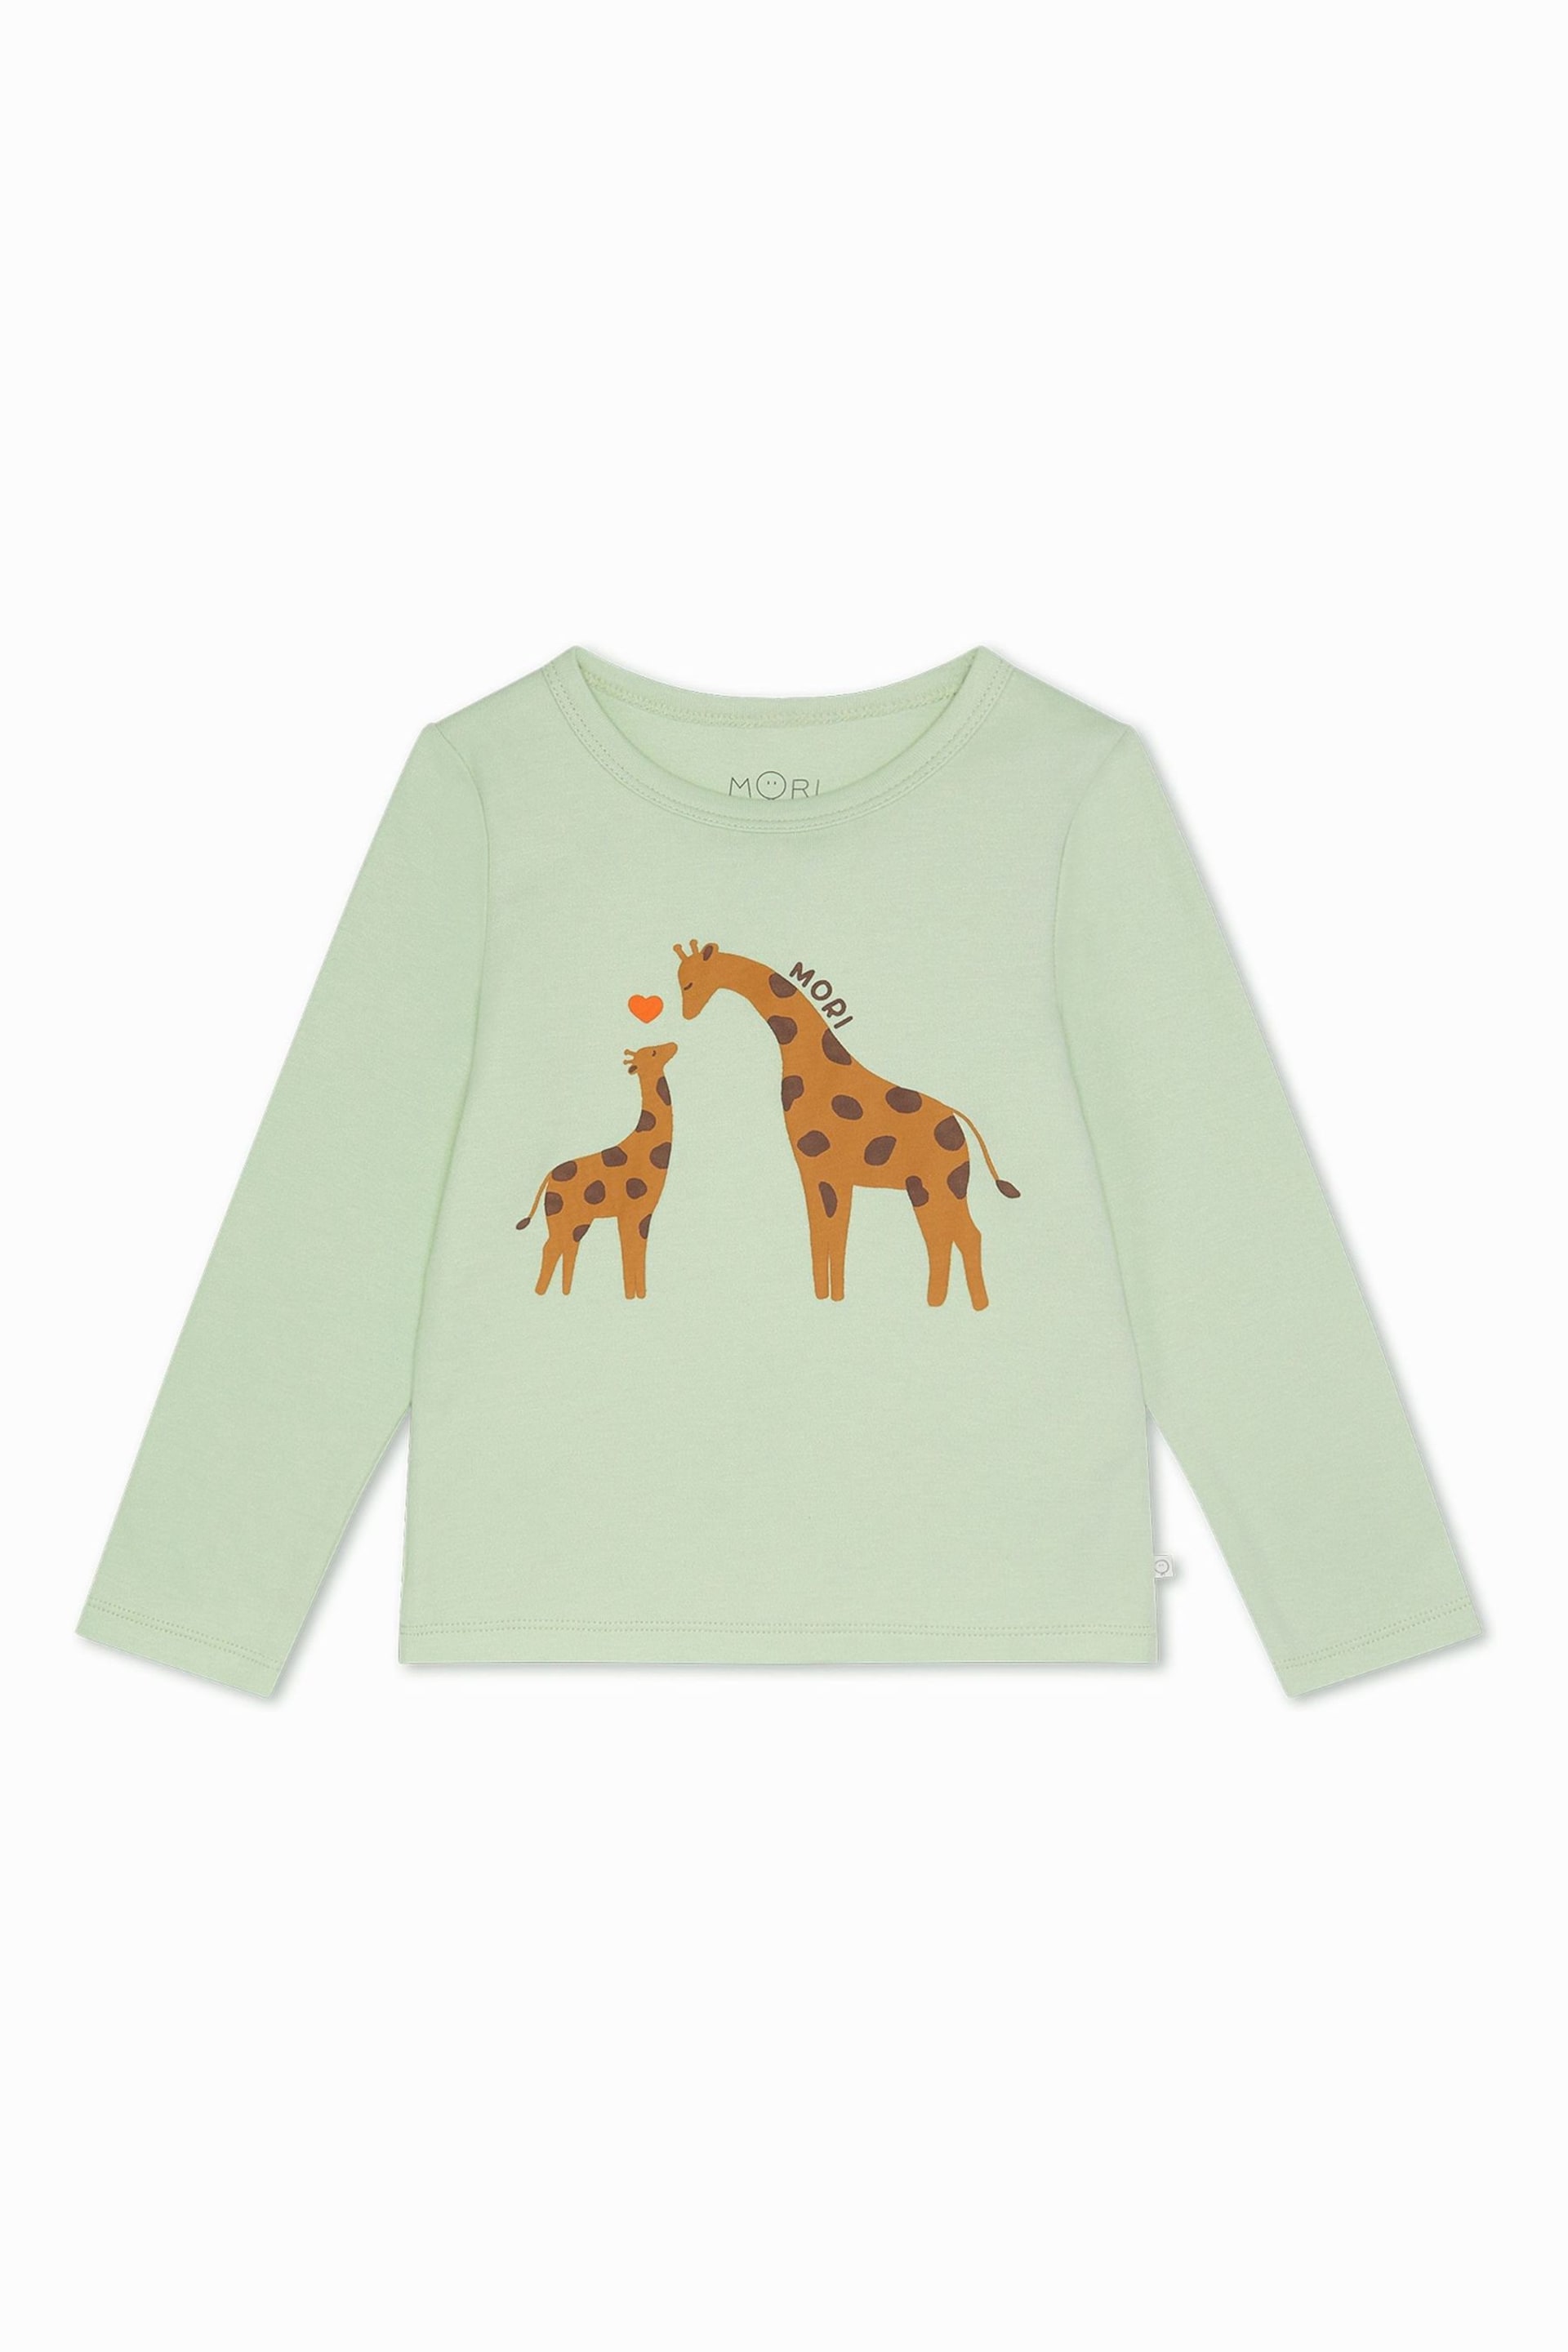 MORI Cream Organic Cotton & Bamboo Giraffe Long Sleeve T-Shirt - Image 1 of 1